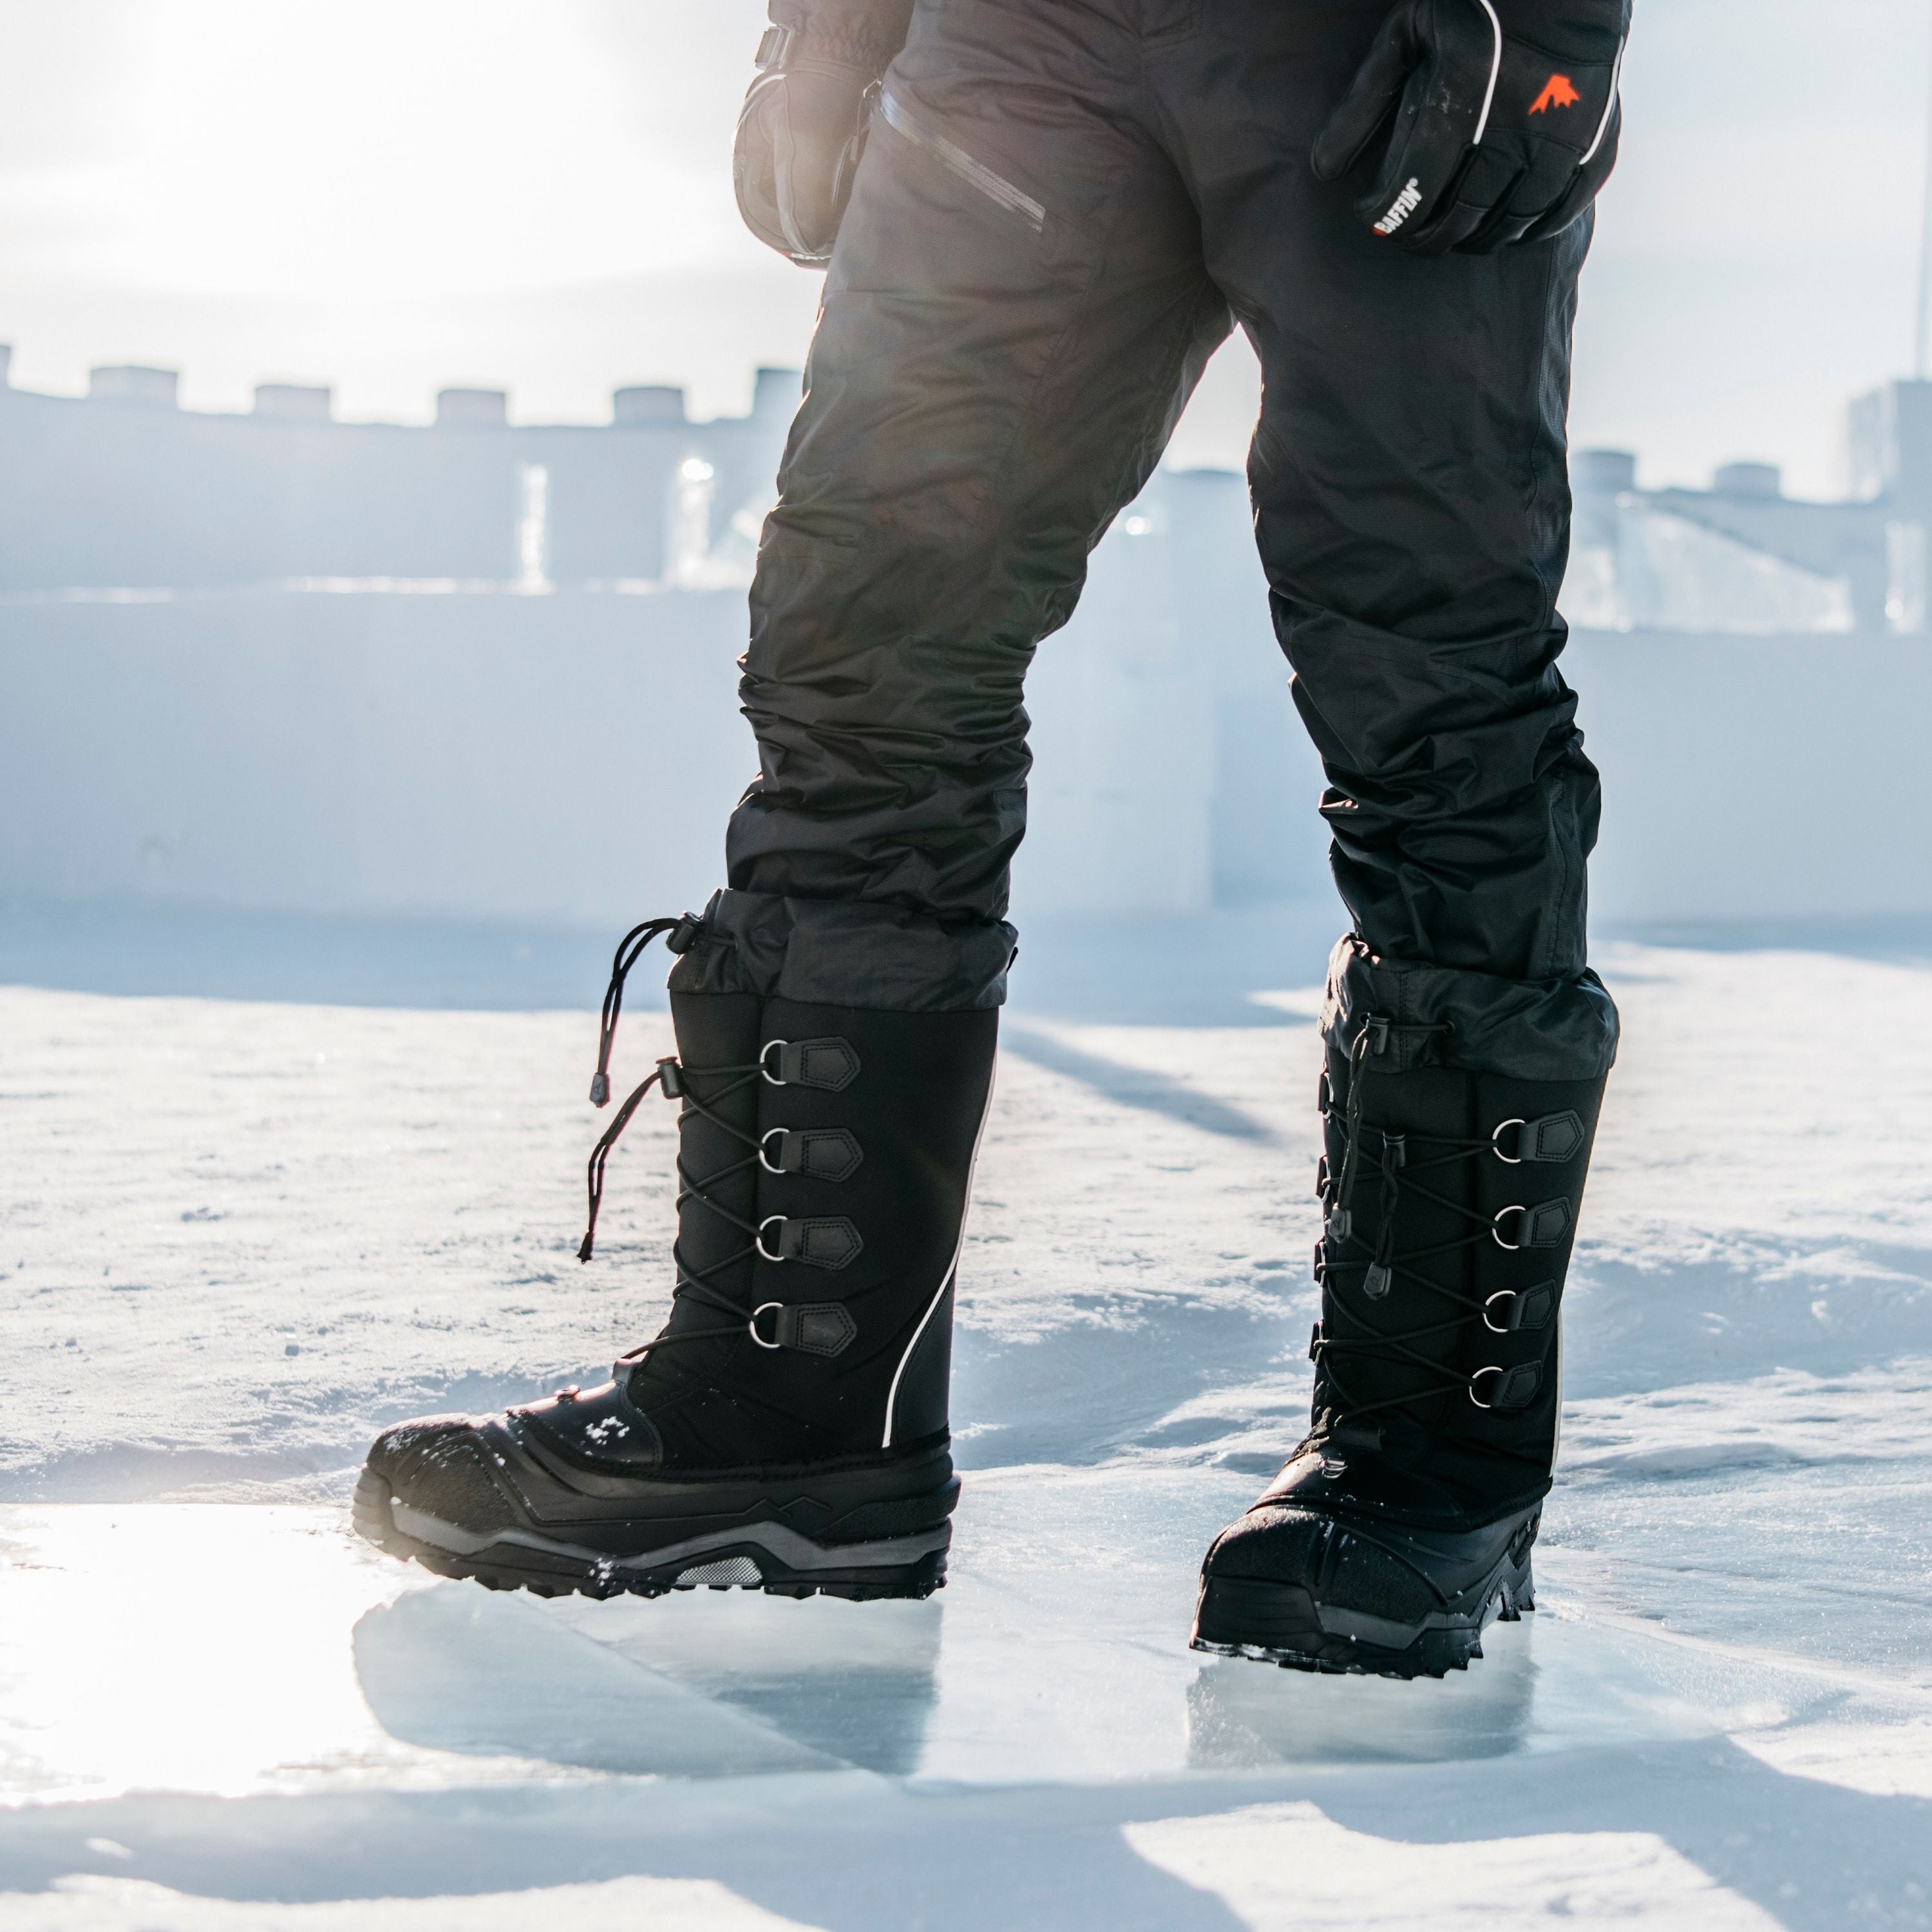 Bottes d'hiver "Icebreaker" - Homme||"Icebreaker" Winter boots - Men’s